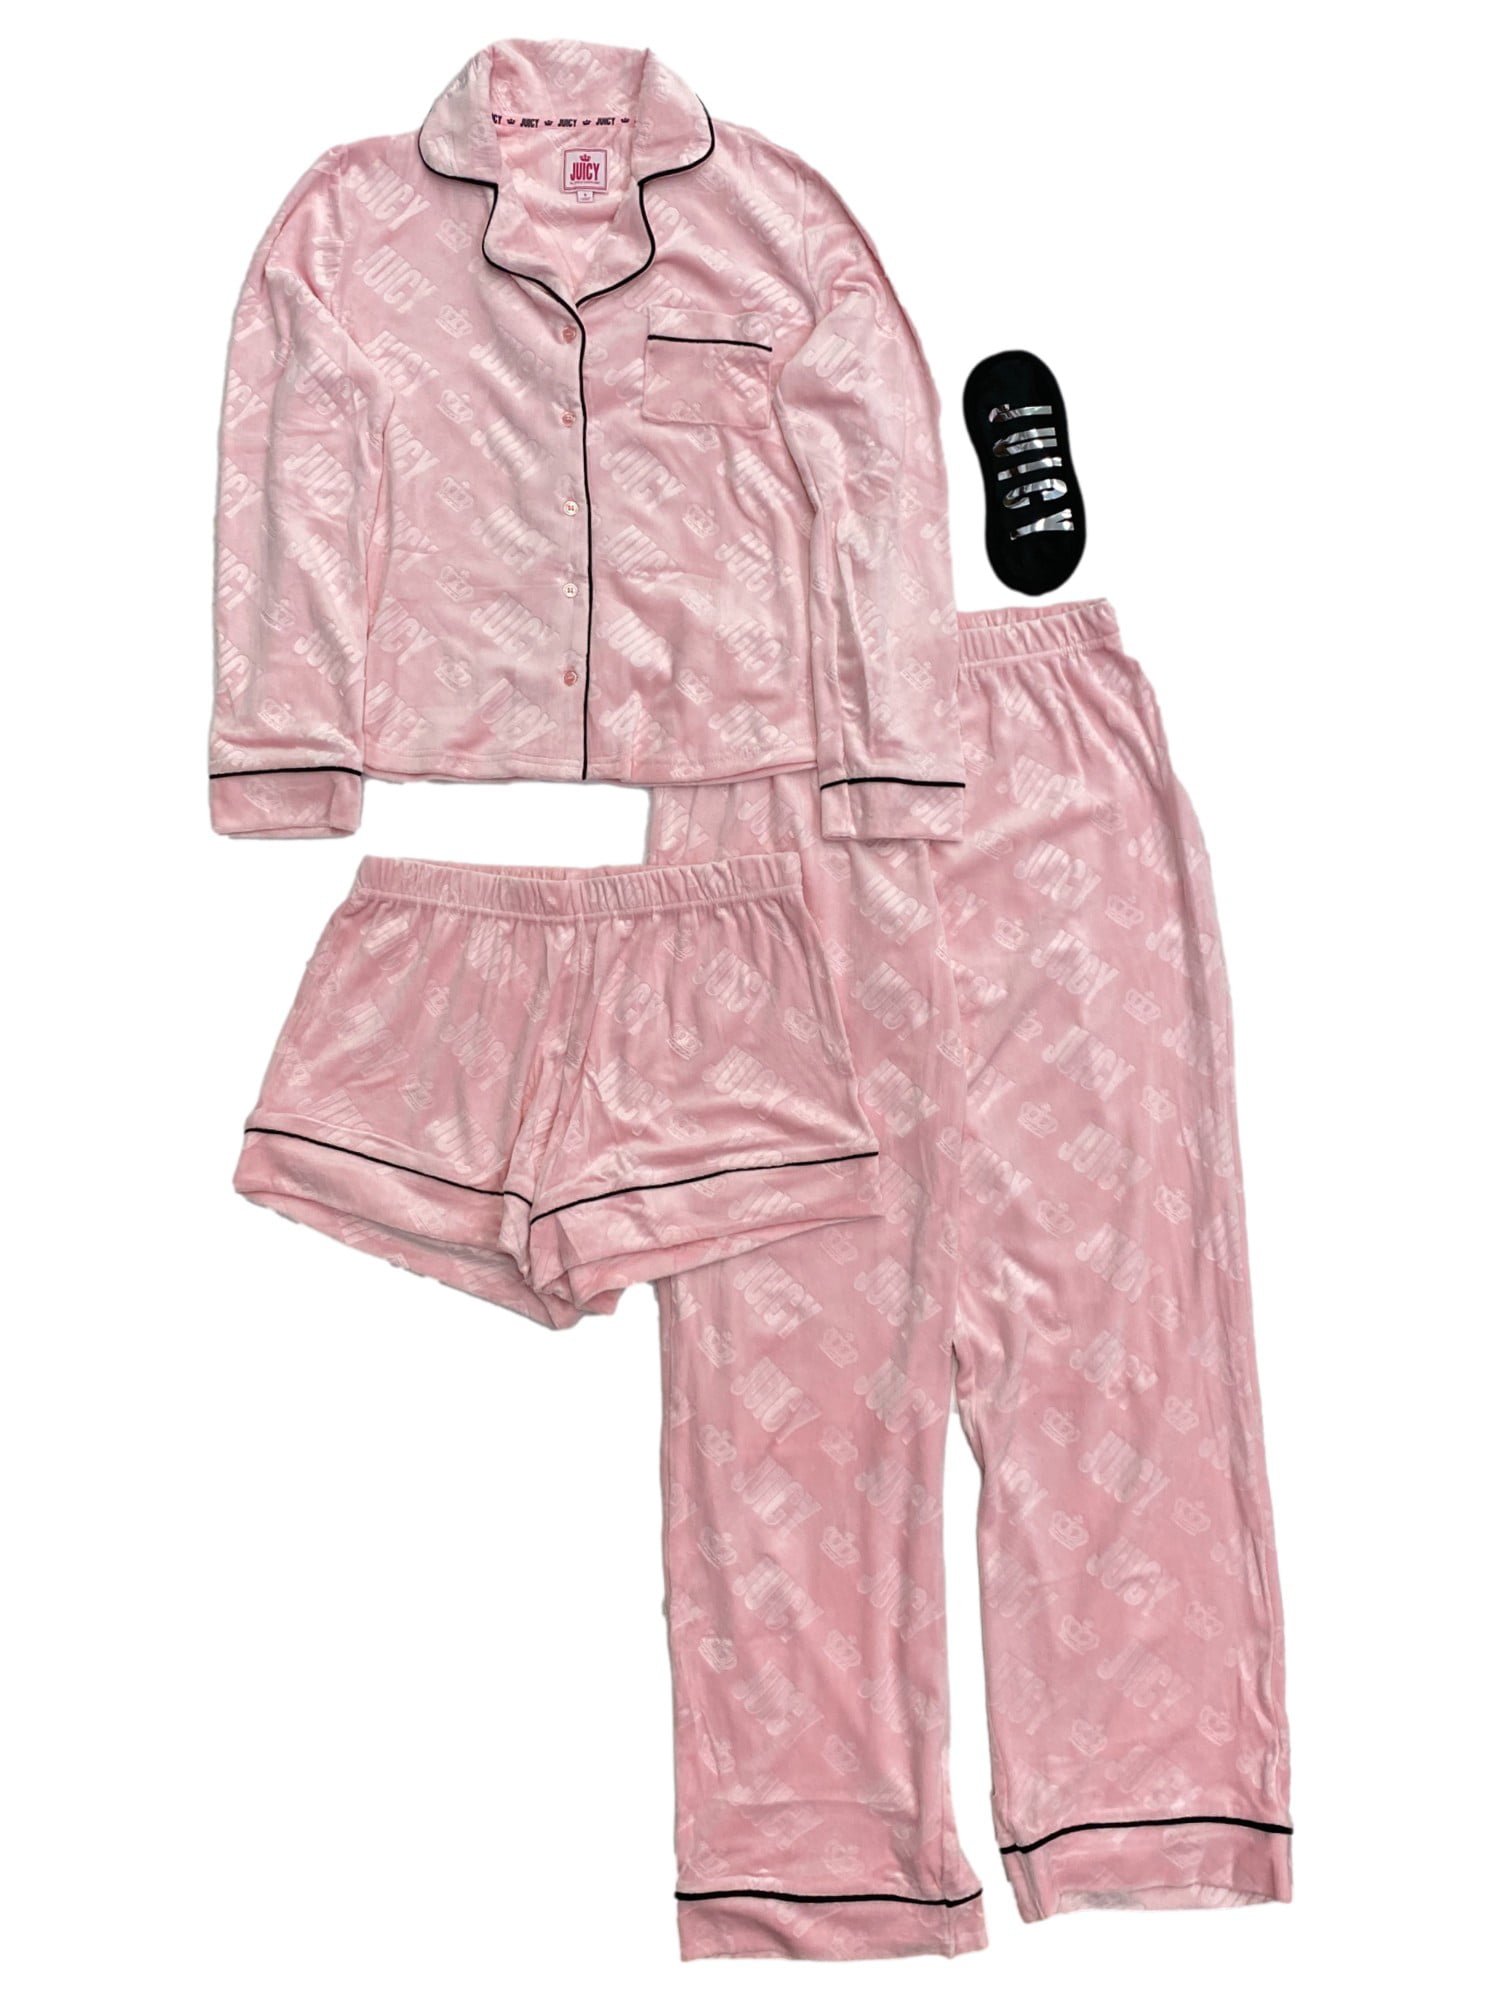 Juicy Couture Womens Plush Pink Pajamas Shorts Pants Top Sleep